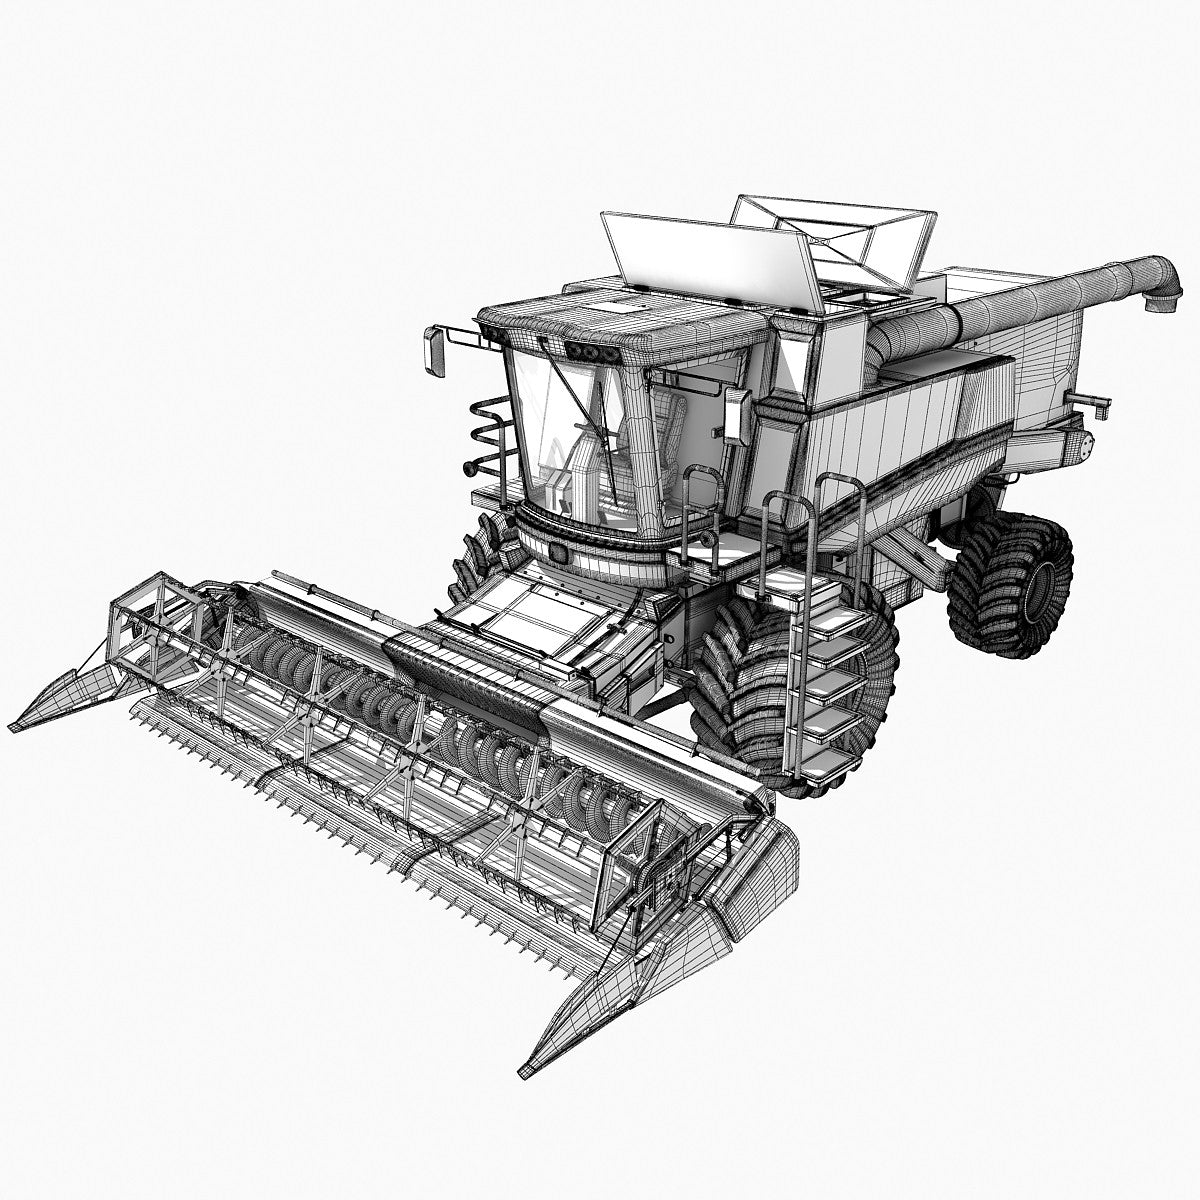 Combine Harvester 3D Model